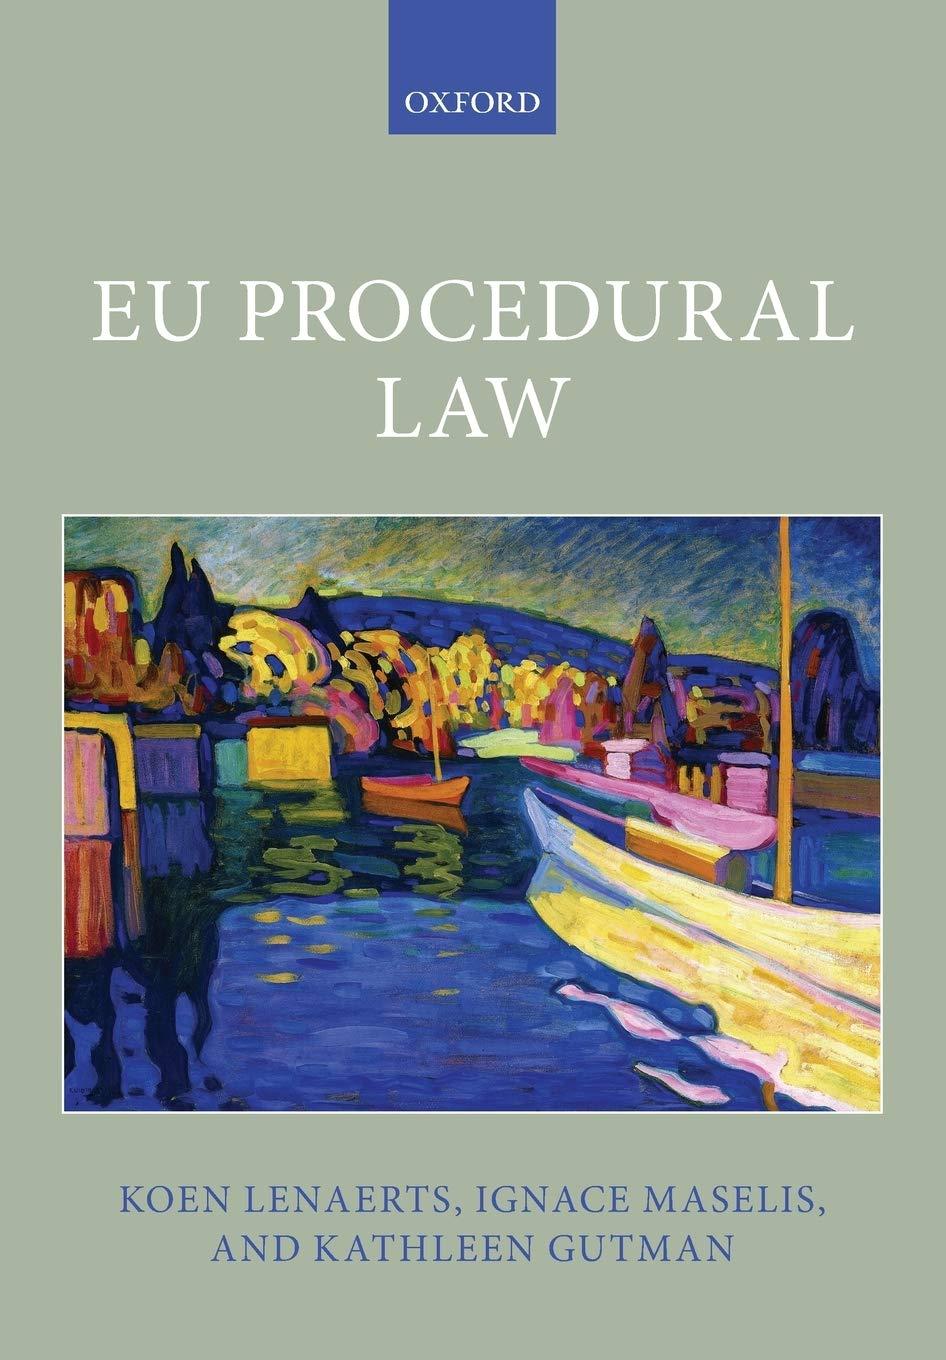 eu procedural law 1st edition koen lenaerts, ignace maselis, kathleen gutman 0198707347, 978-0198707349